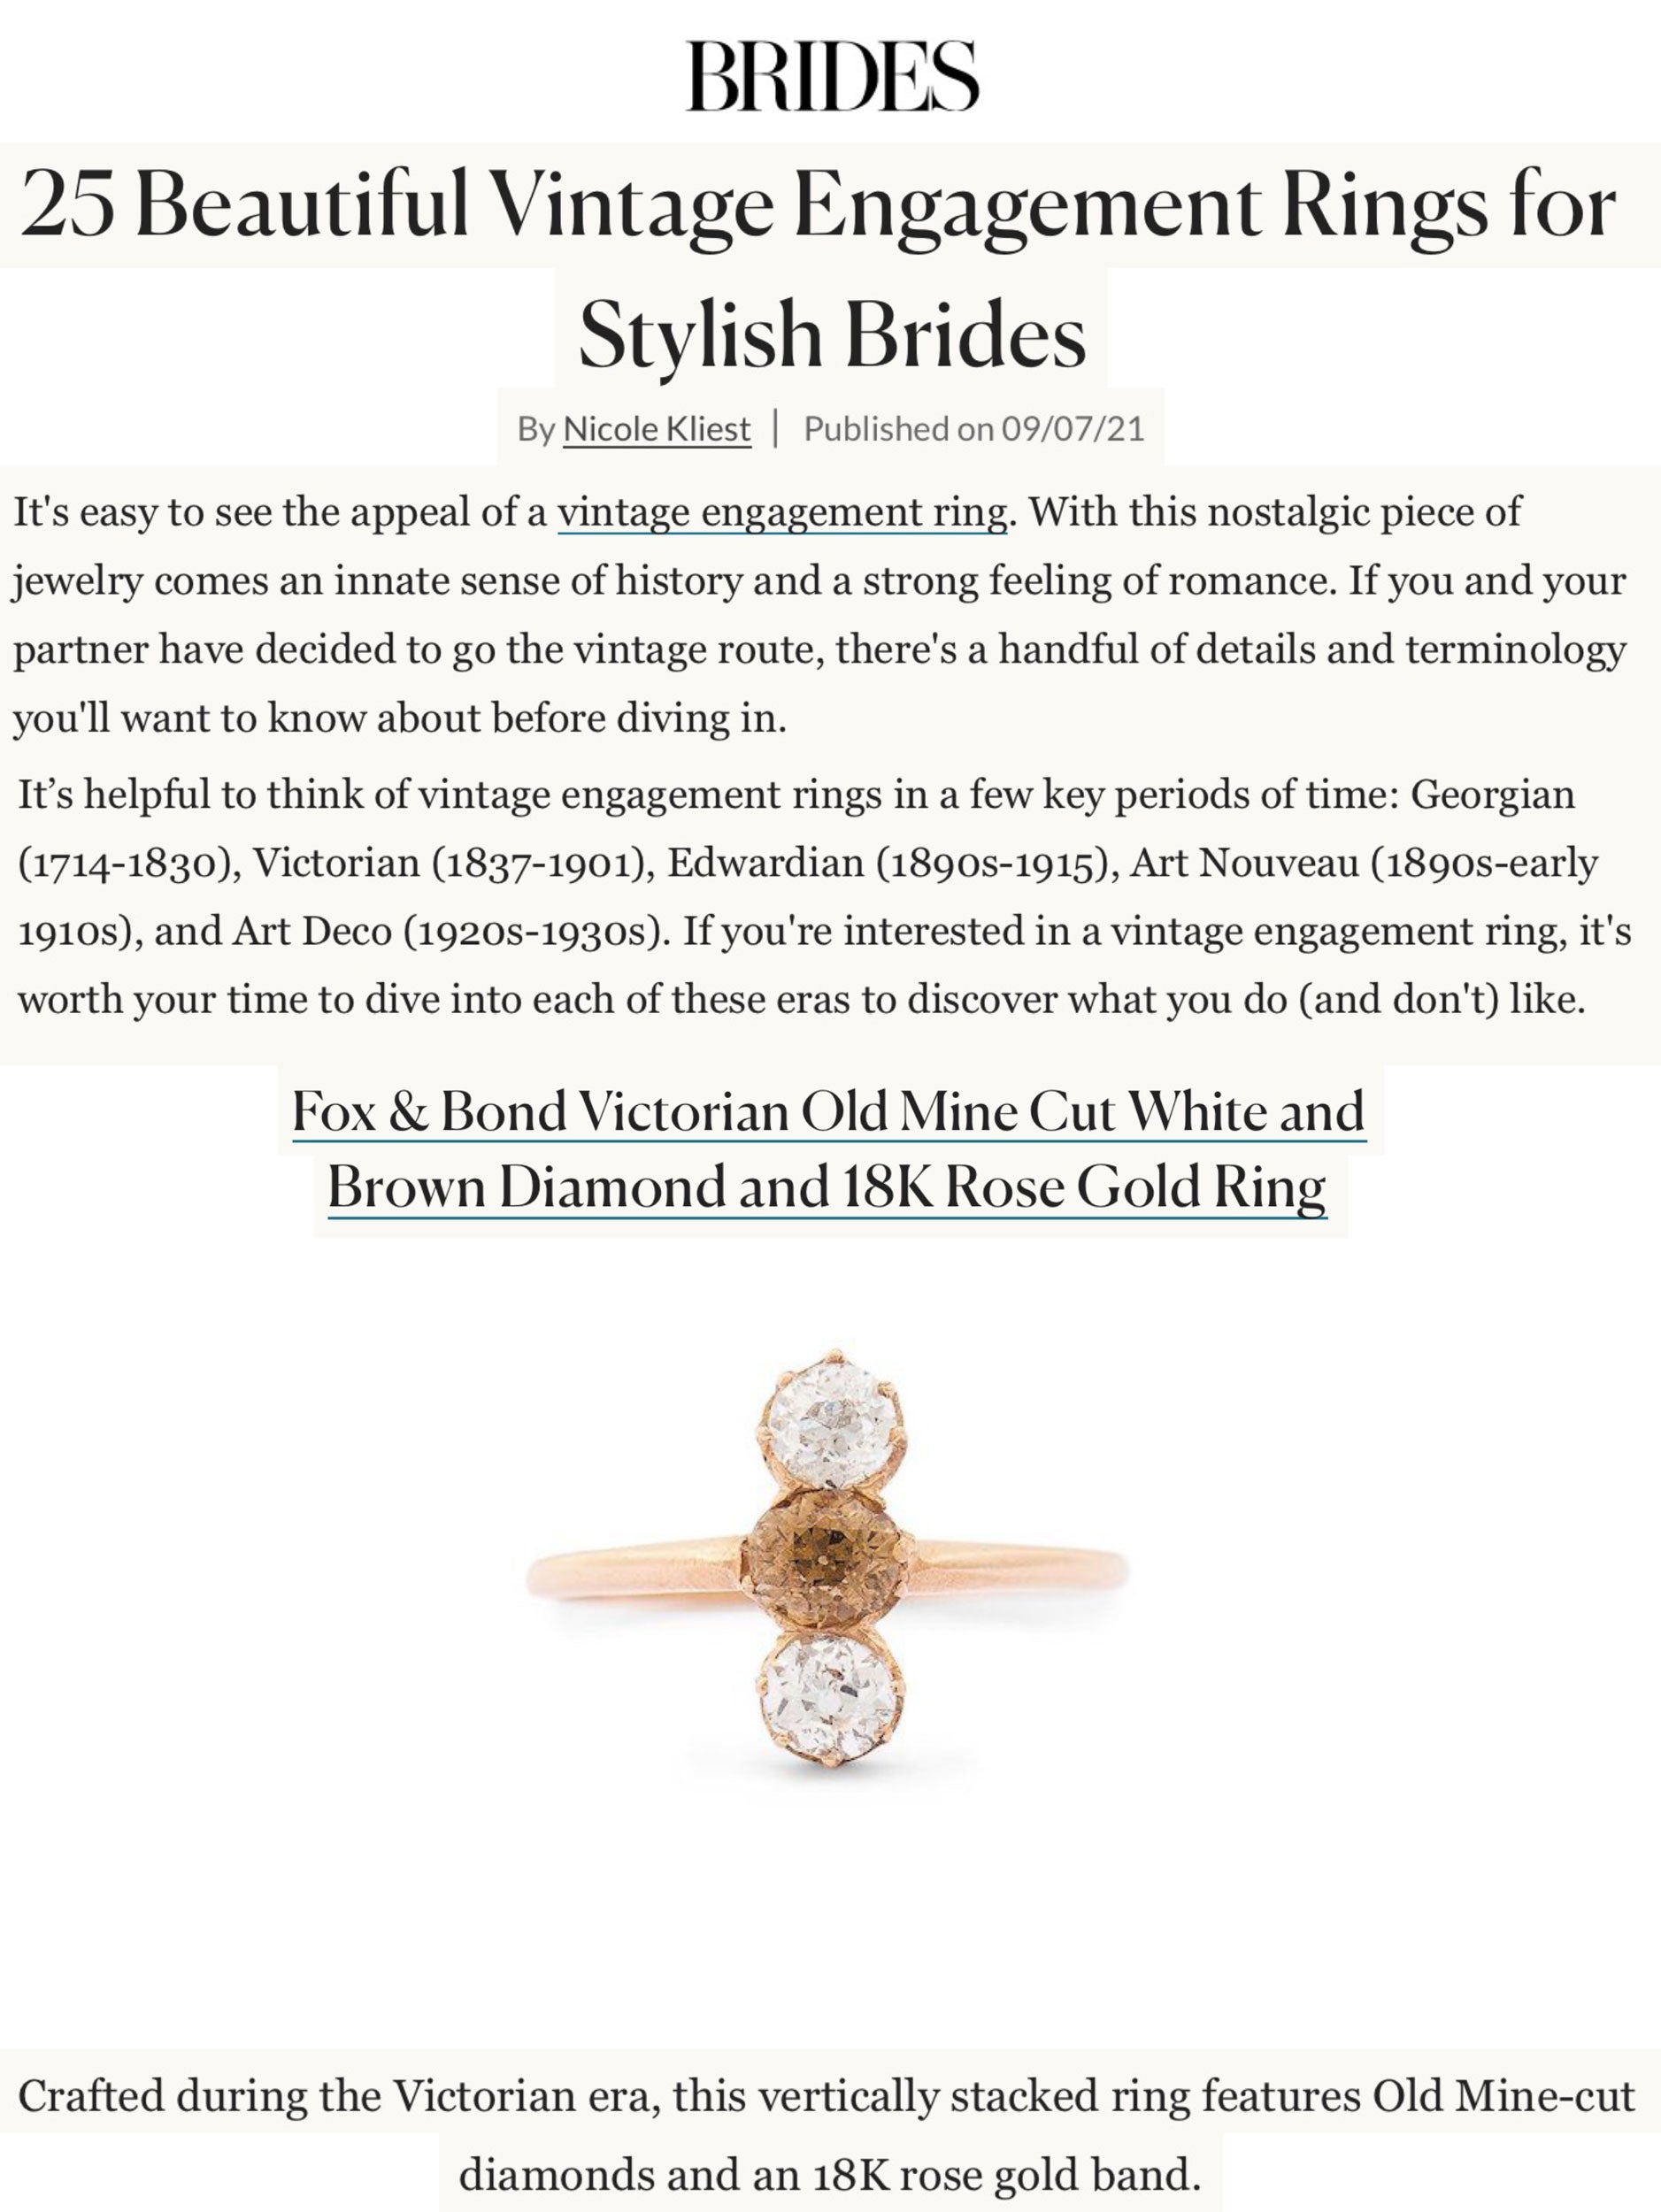 Brides: 25 Beautiful Vintage Engagement Rings for Stylish Brides